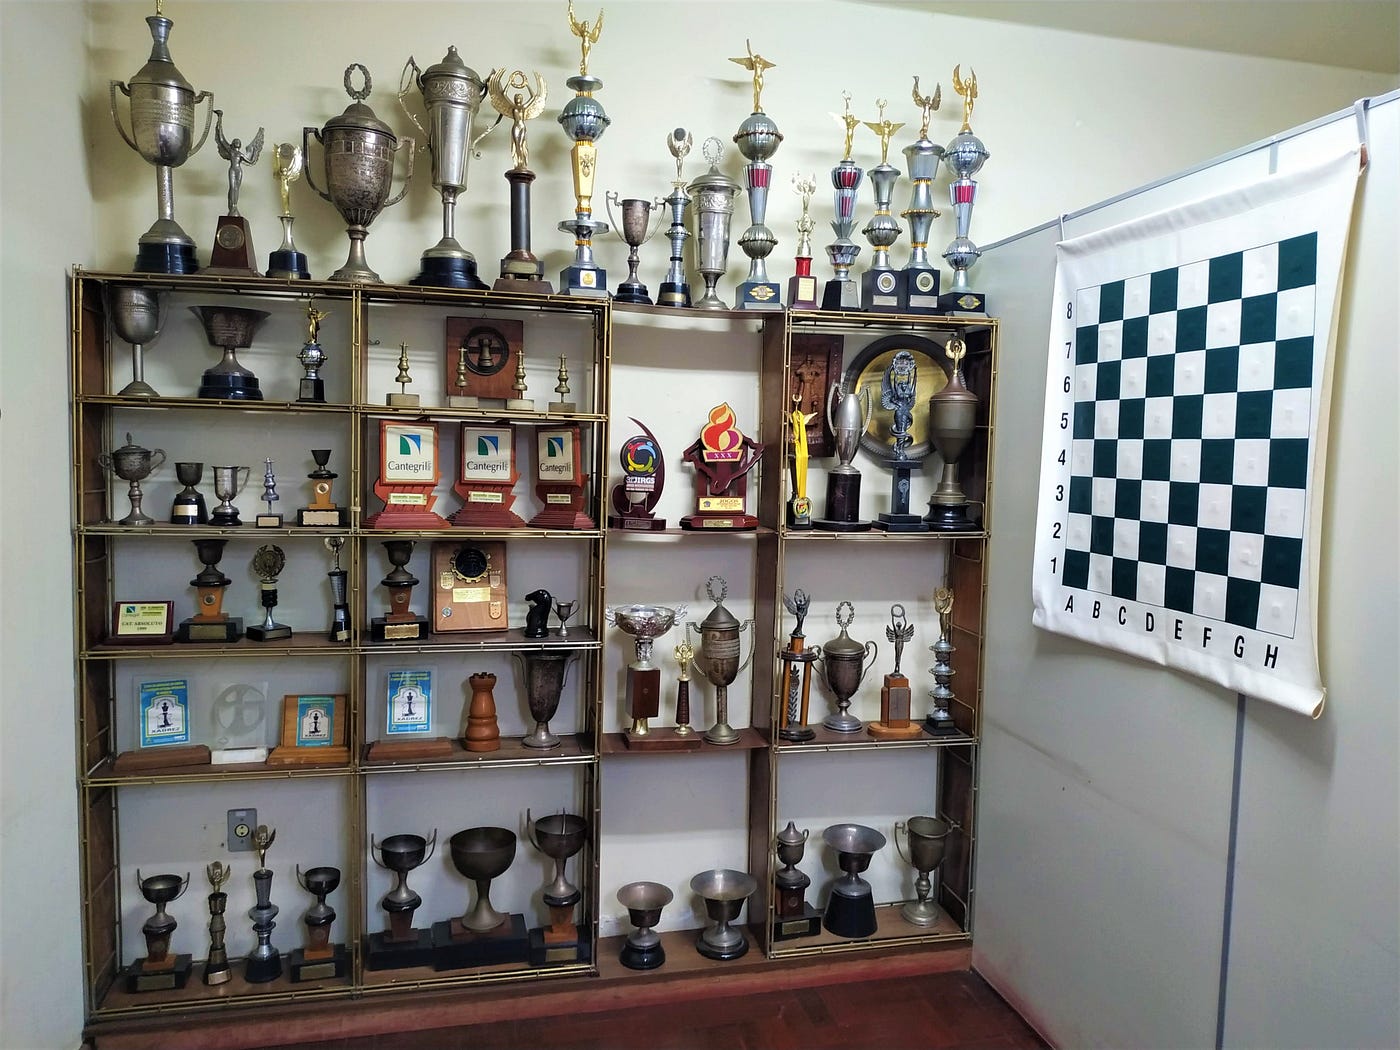 Clube Português de Niterói - xadrez - clube de xadrez 